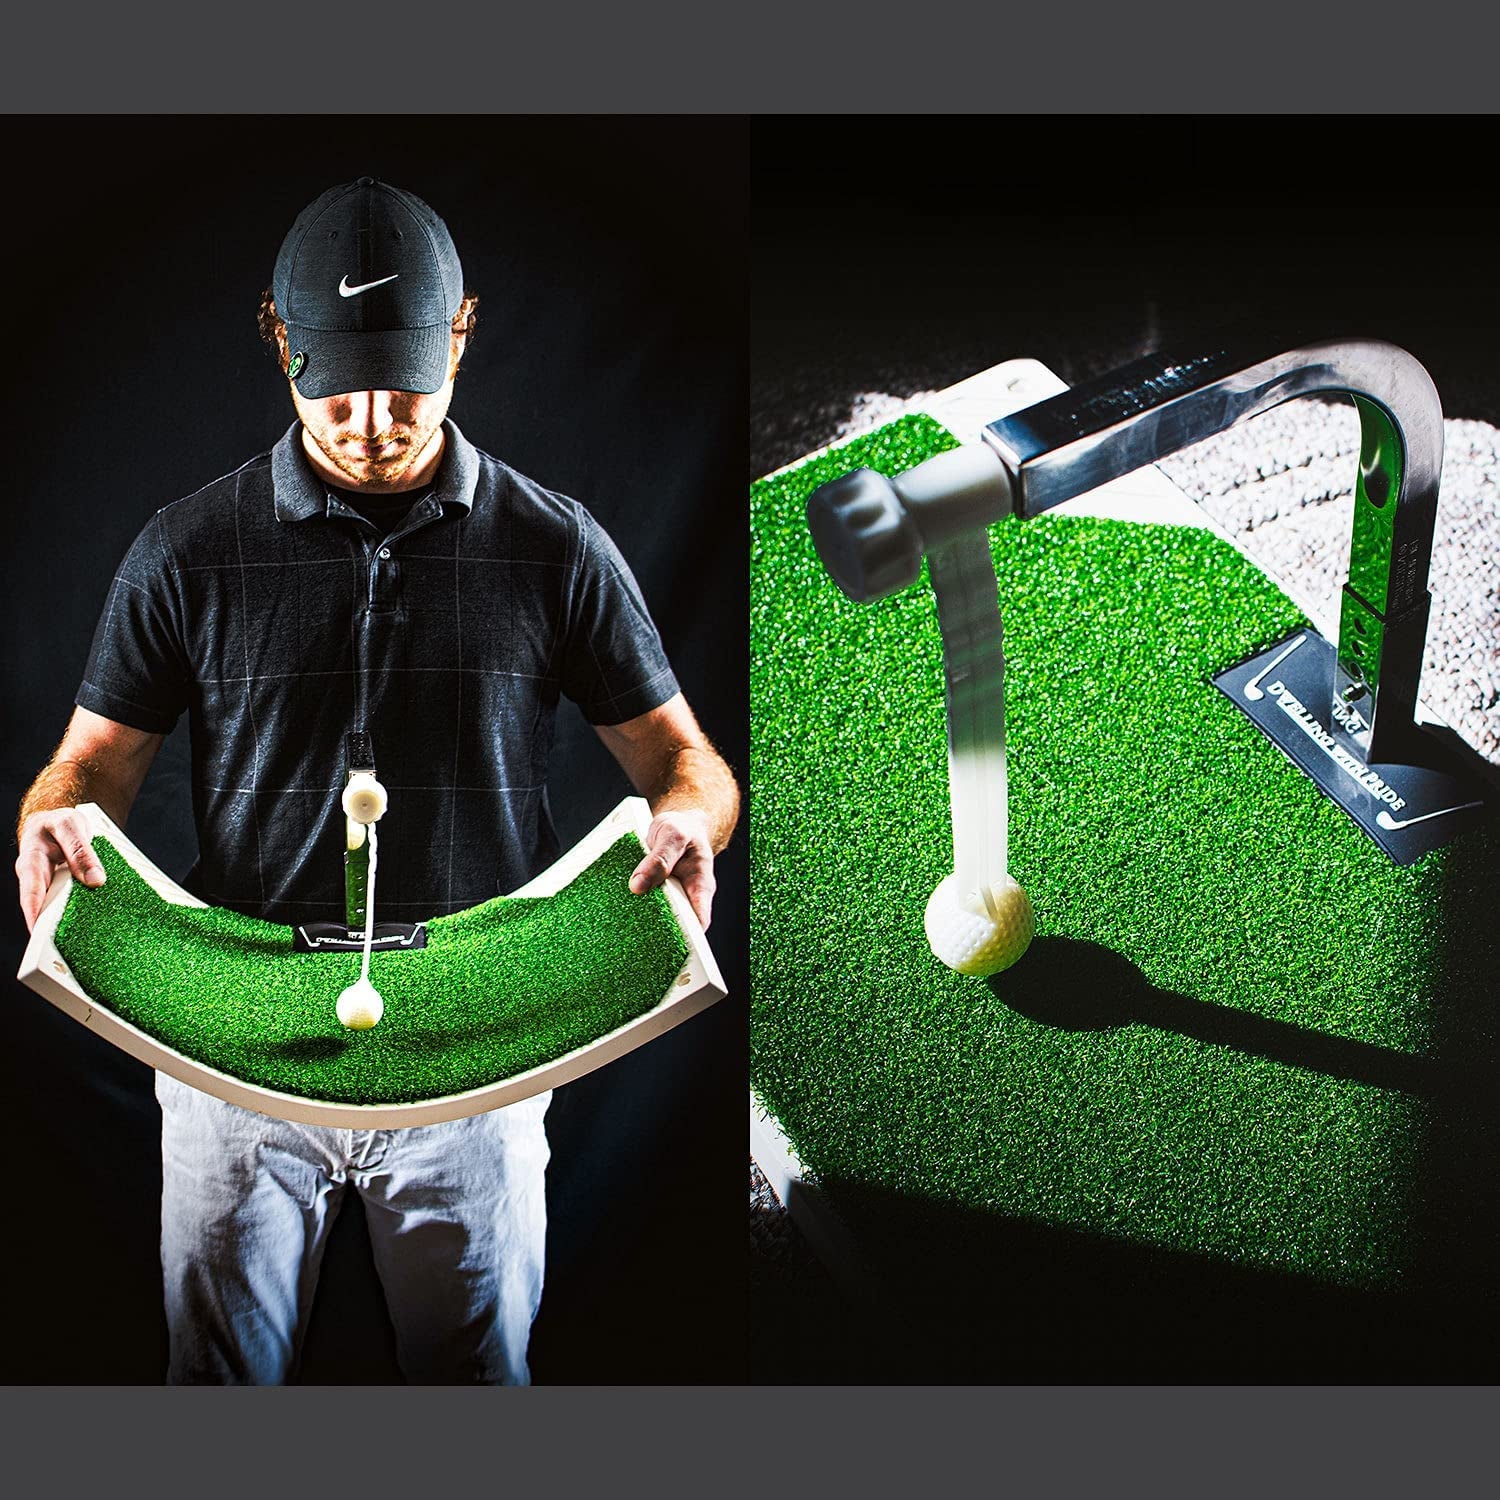 Golf Practice Equipment - Golf Training Aids Swing